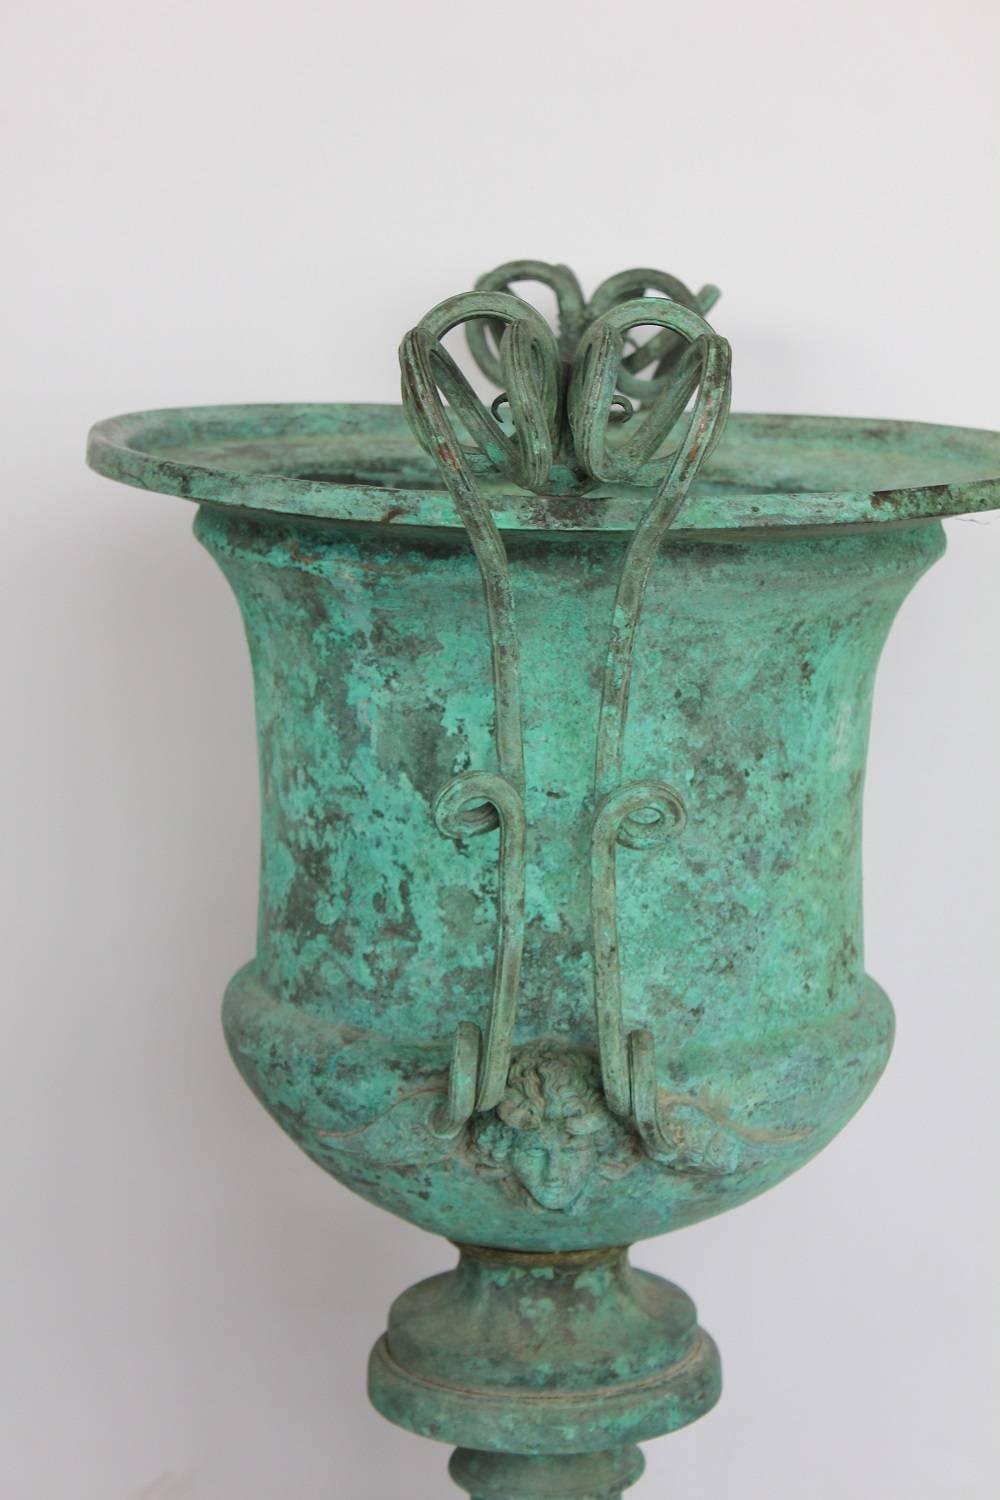 Antique French decorative copper urn.